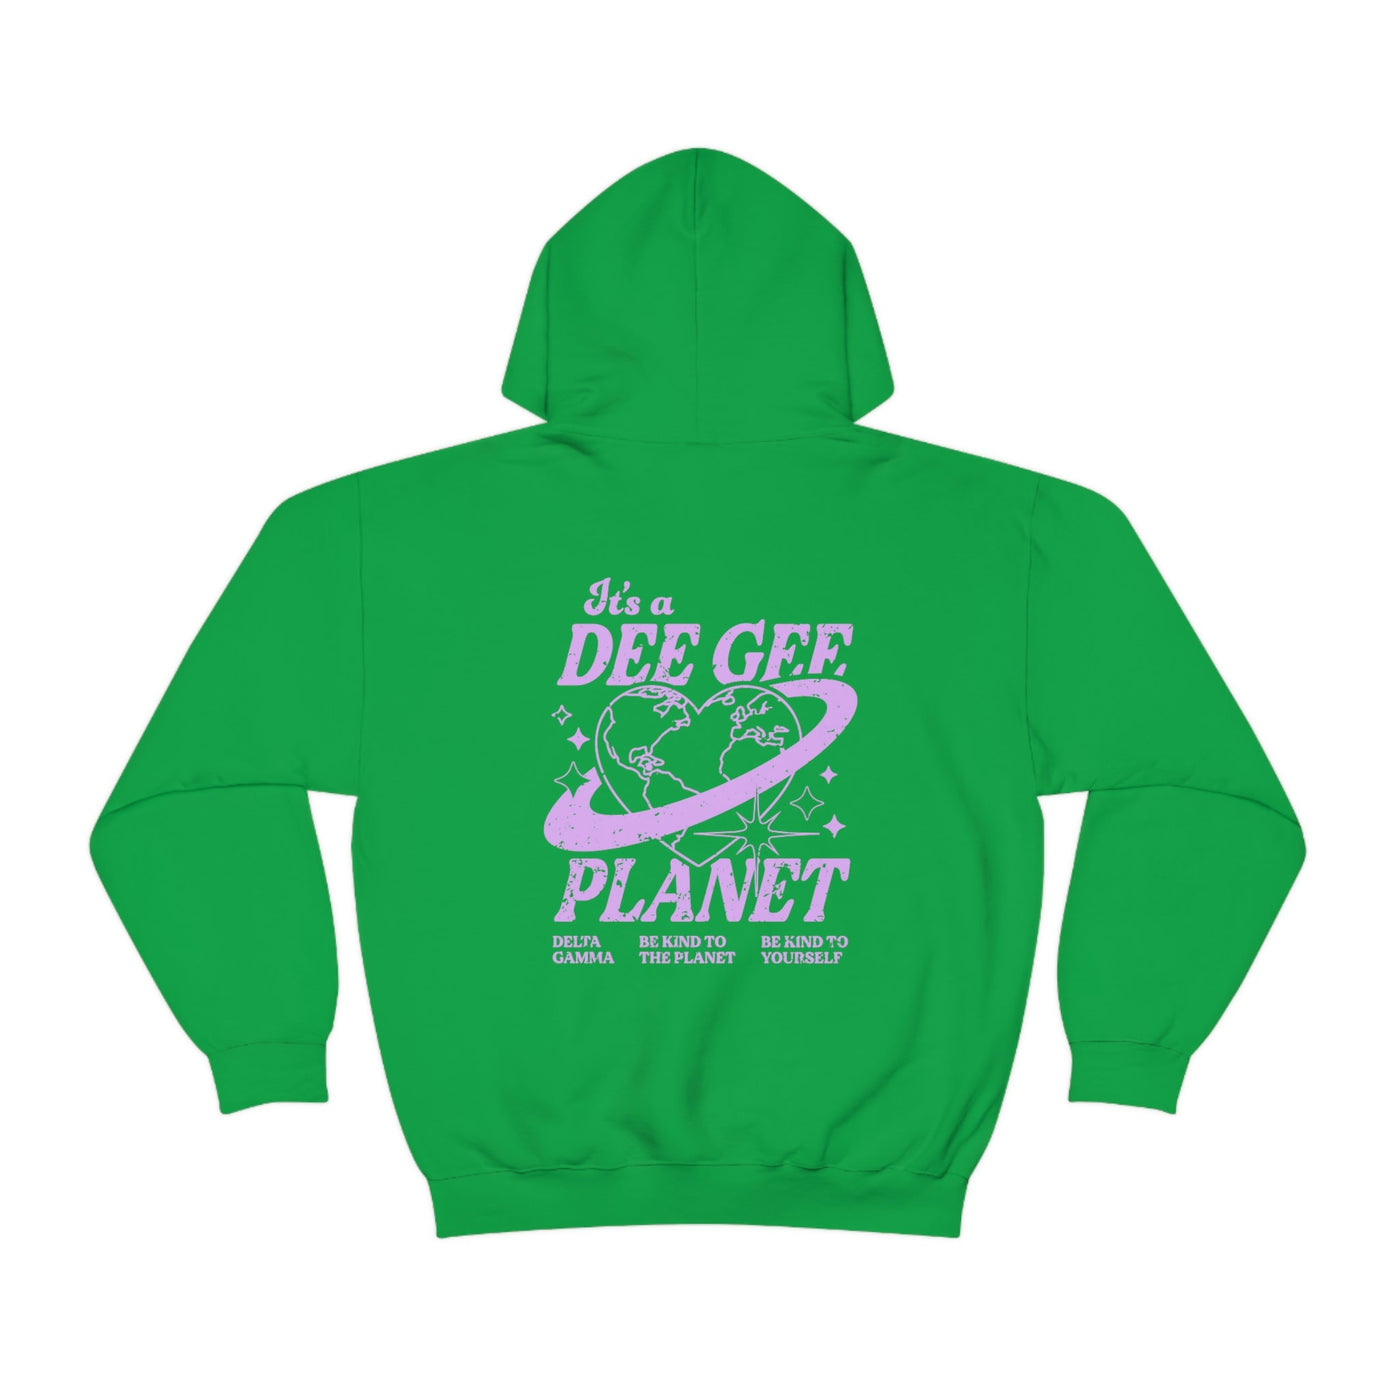 Delta Gamma Planet Hoodie | Be Kind to the Planet Trendy Sorority Hoodie